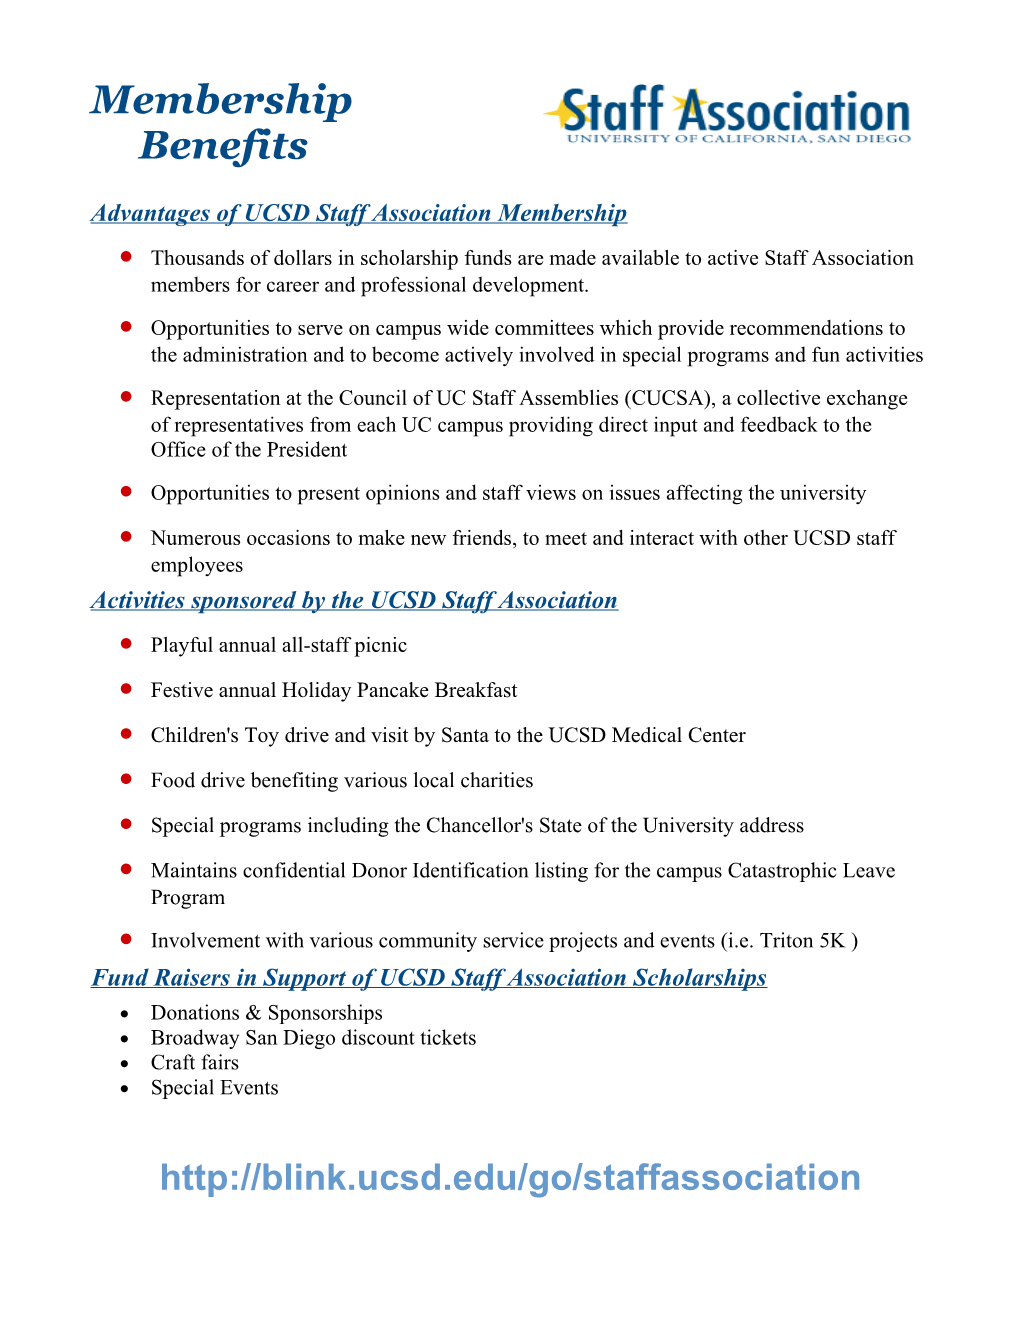 Advantages of UCSD Staff Association Membership